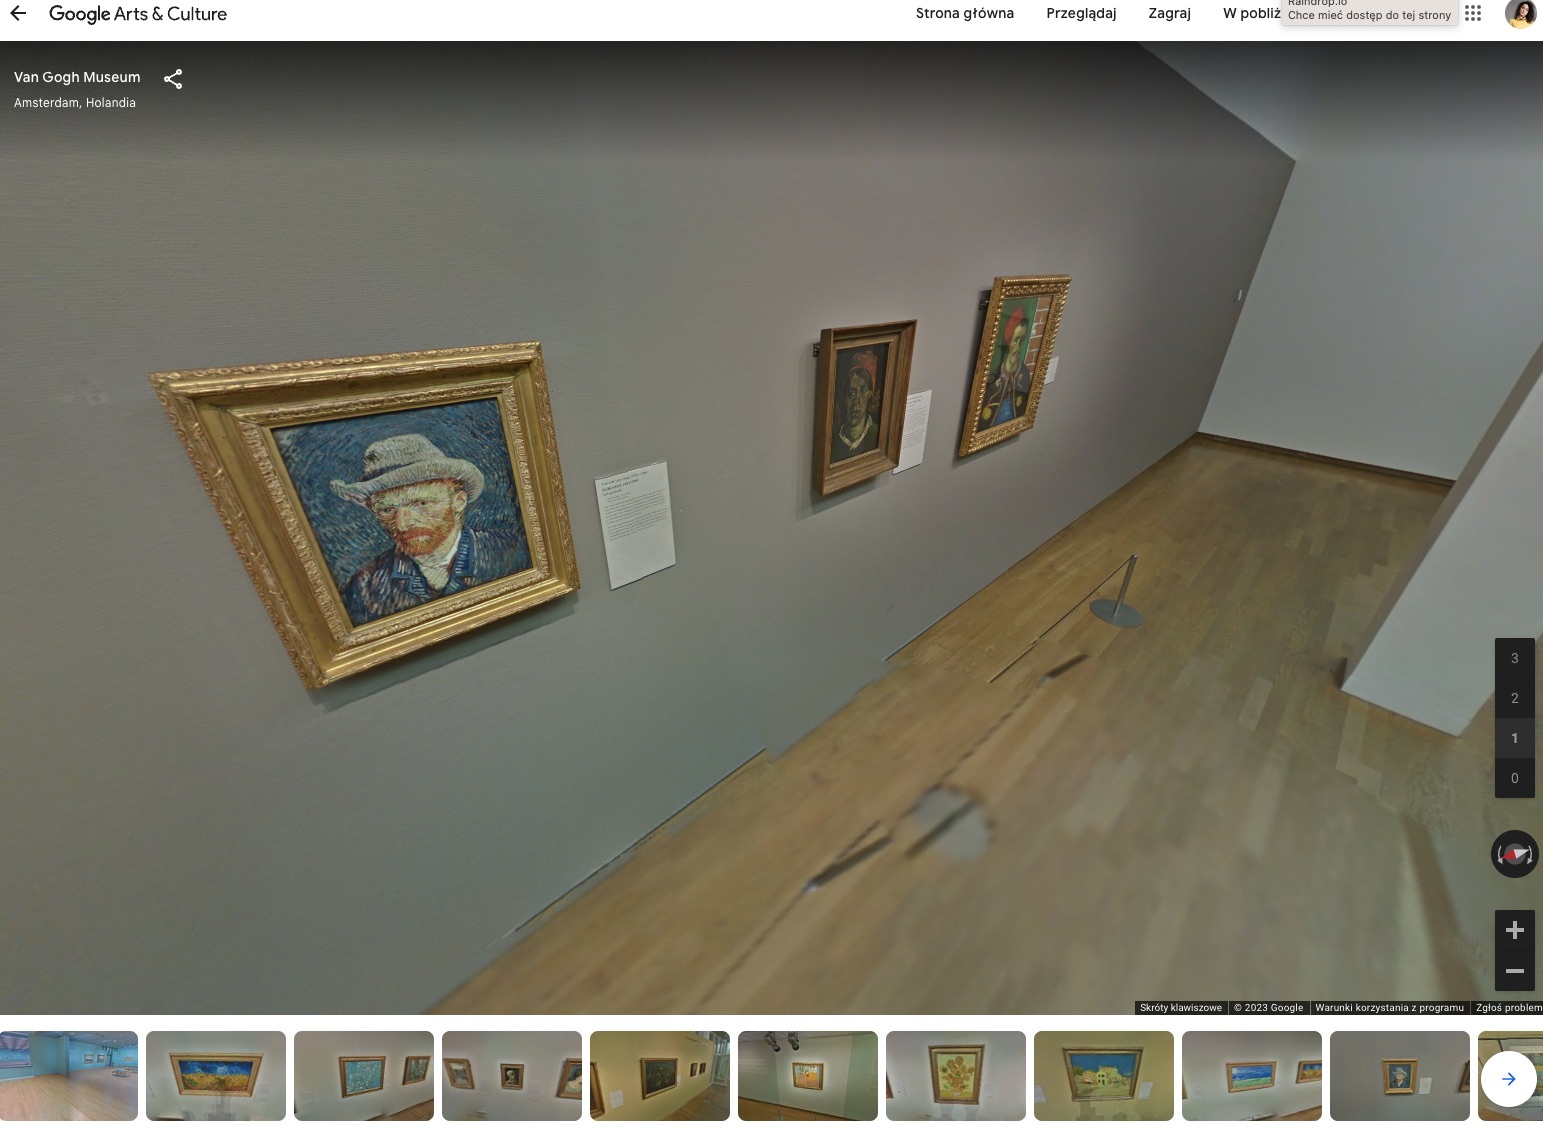 A Digital tour in Van Goghs museum via Google Arts & Culture App